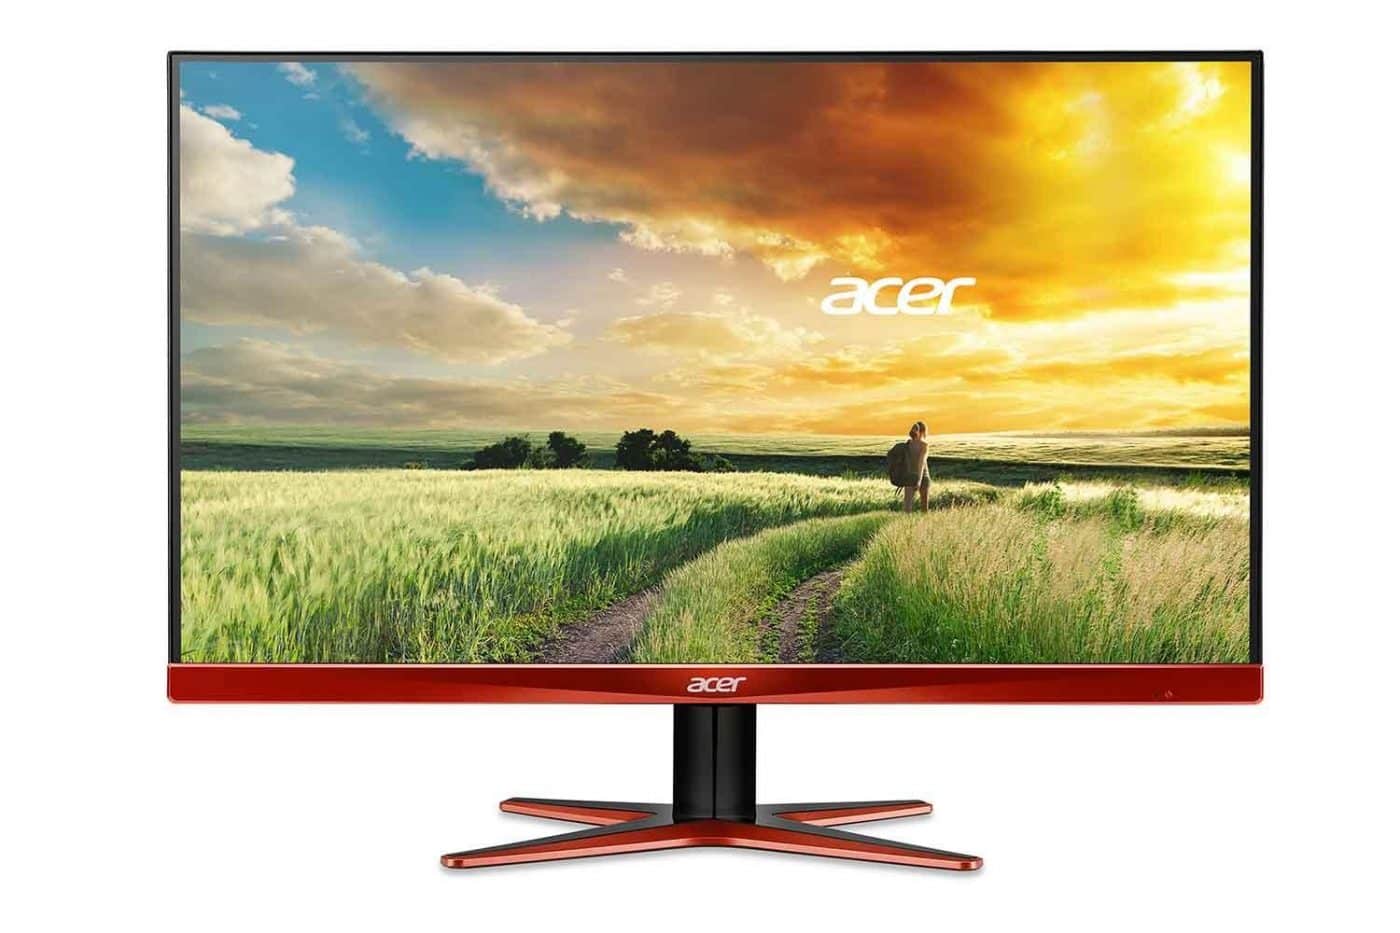 Acer Announces XG270HU Monitor with AMD Freesync